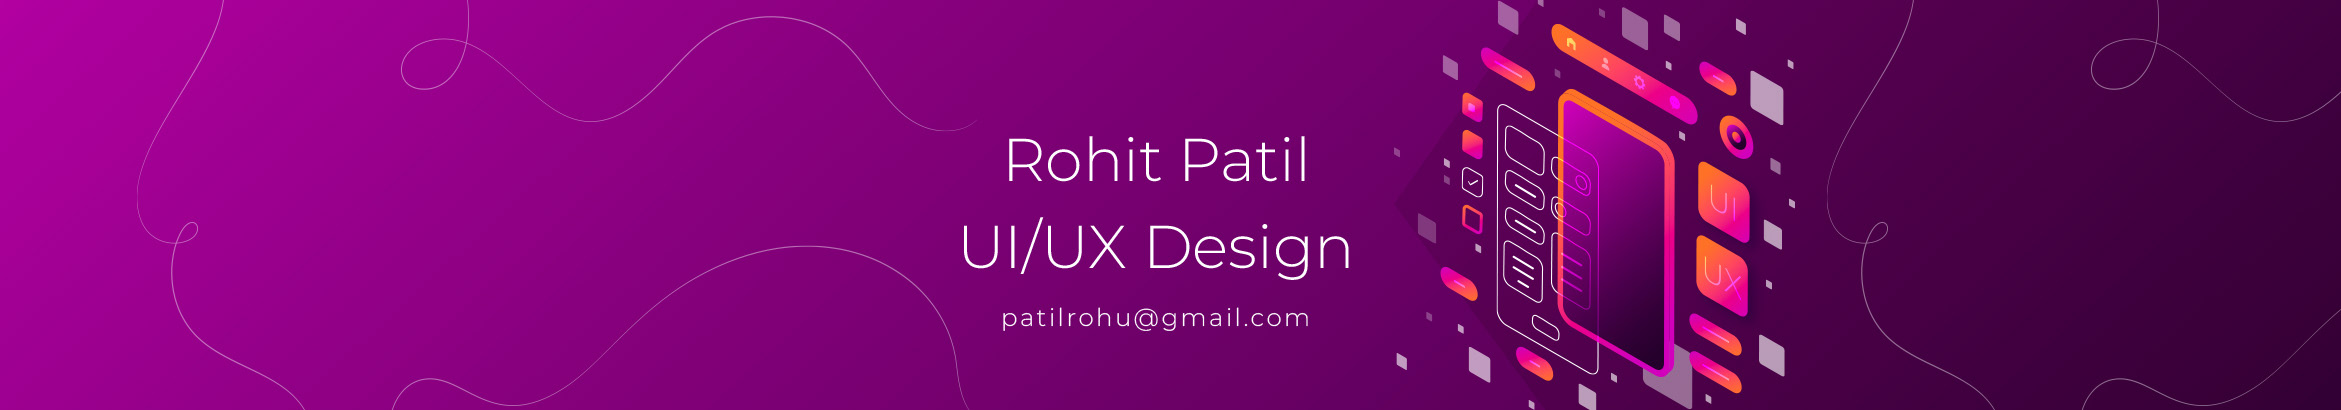 Rohit Patil's profile banner